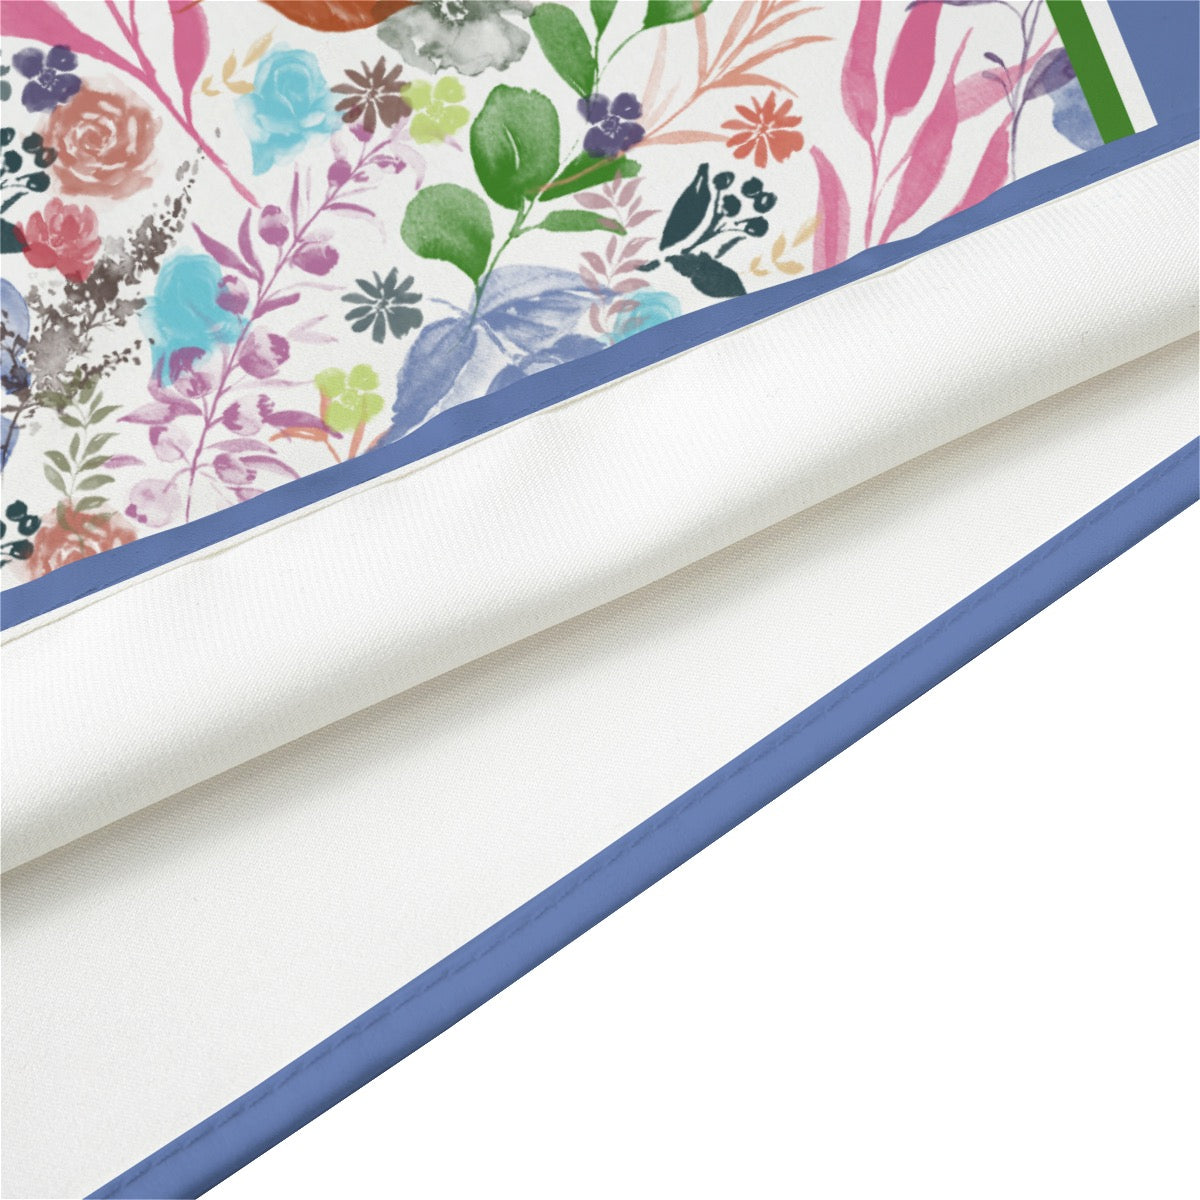 Multicolor Flowers Silk Pareo / Bandana White. Design hand-painted by the Designer Maria Alejandra Echenique